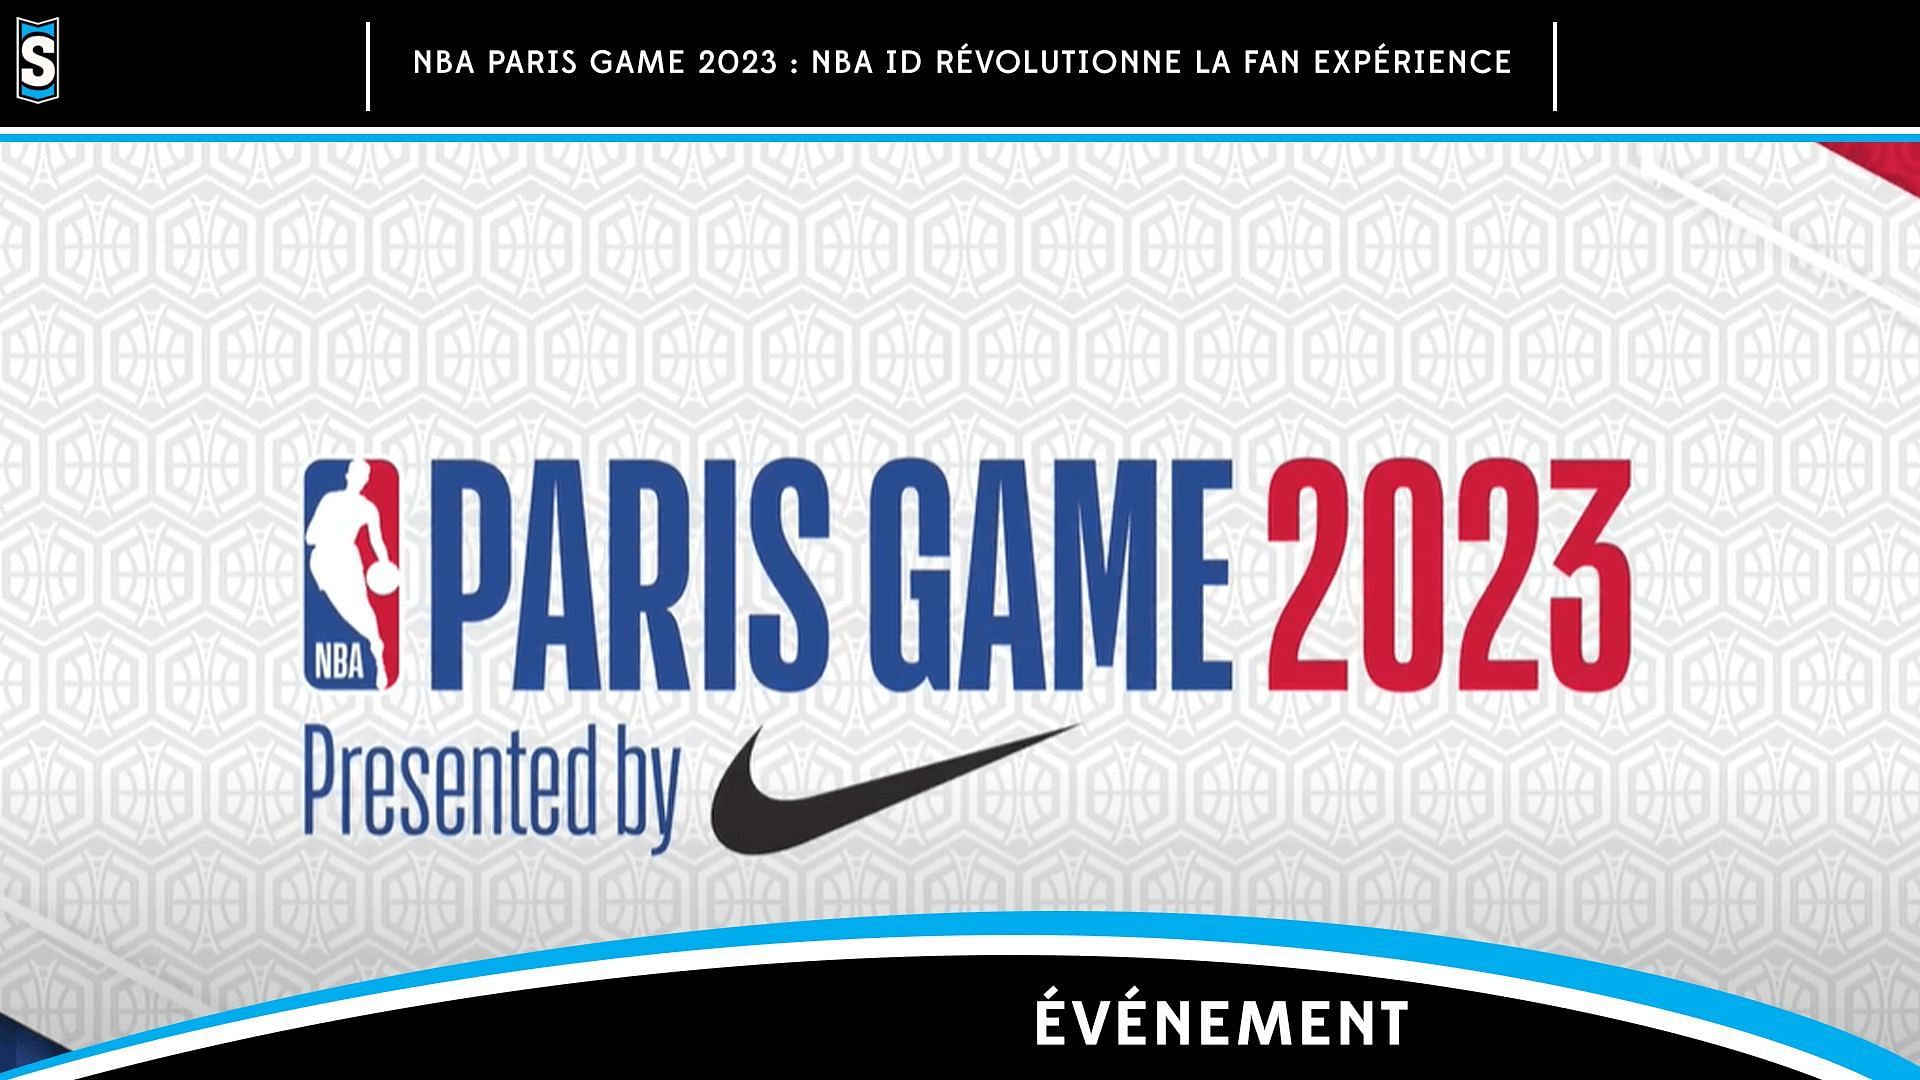 NBA Paris Game 2023 promotional graphic